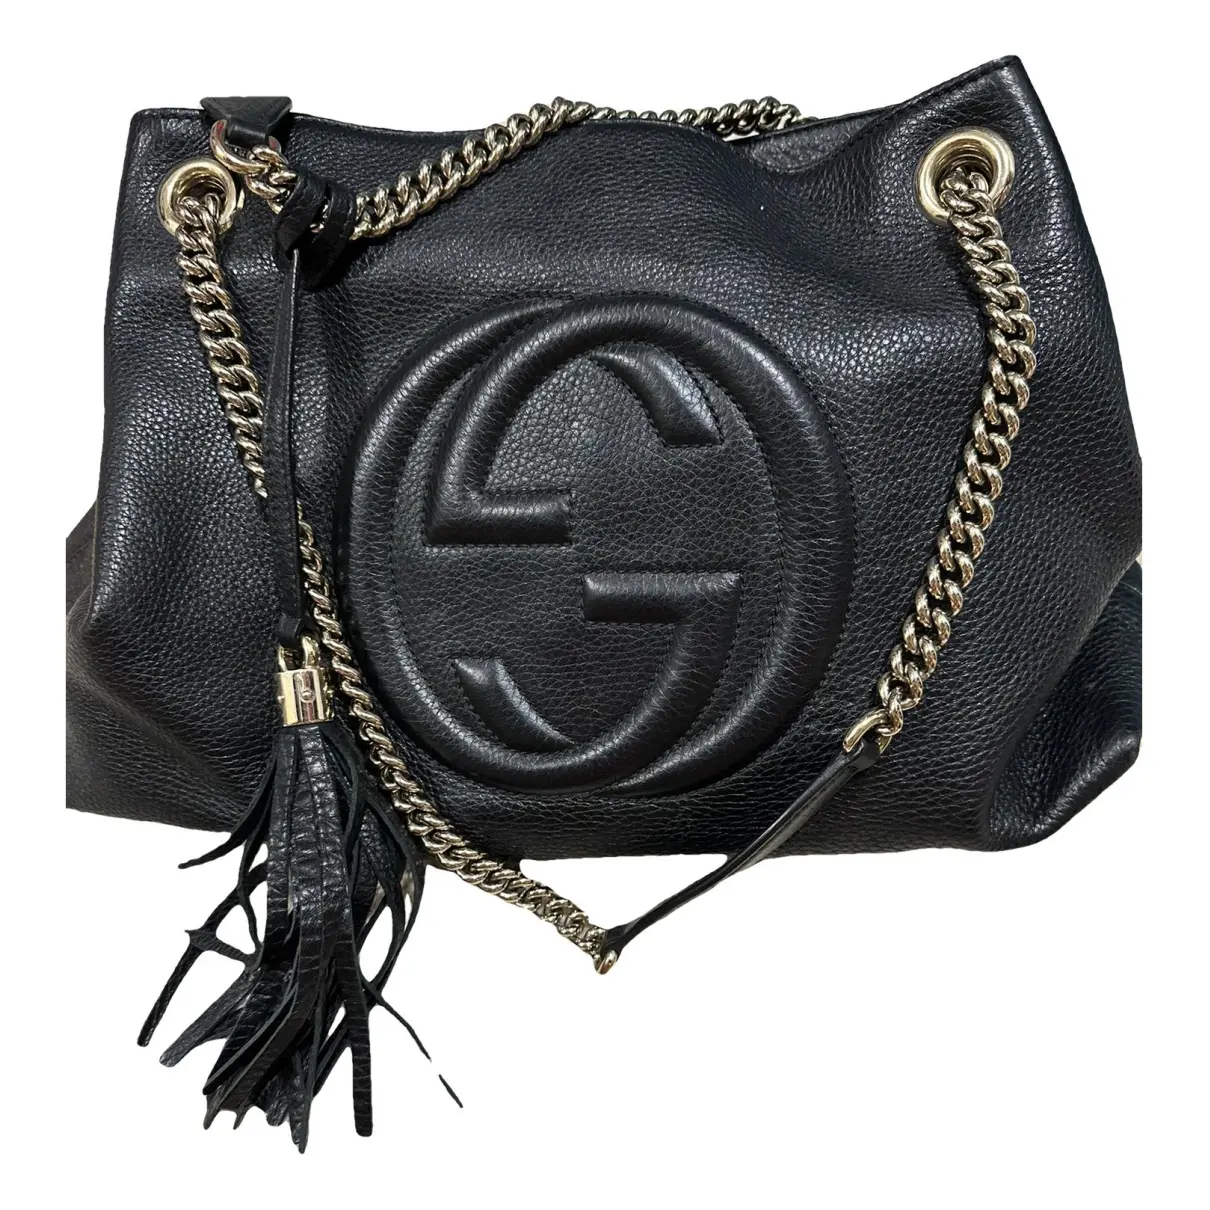 Soho Hobo leather handbag